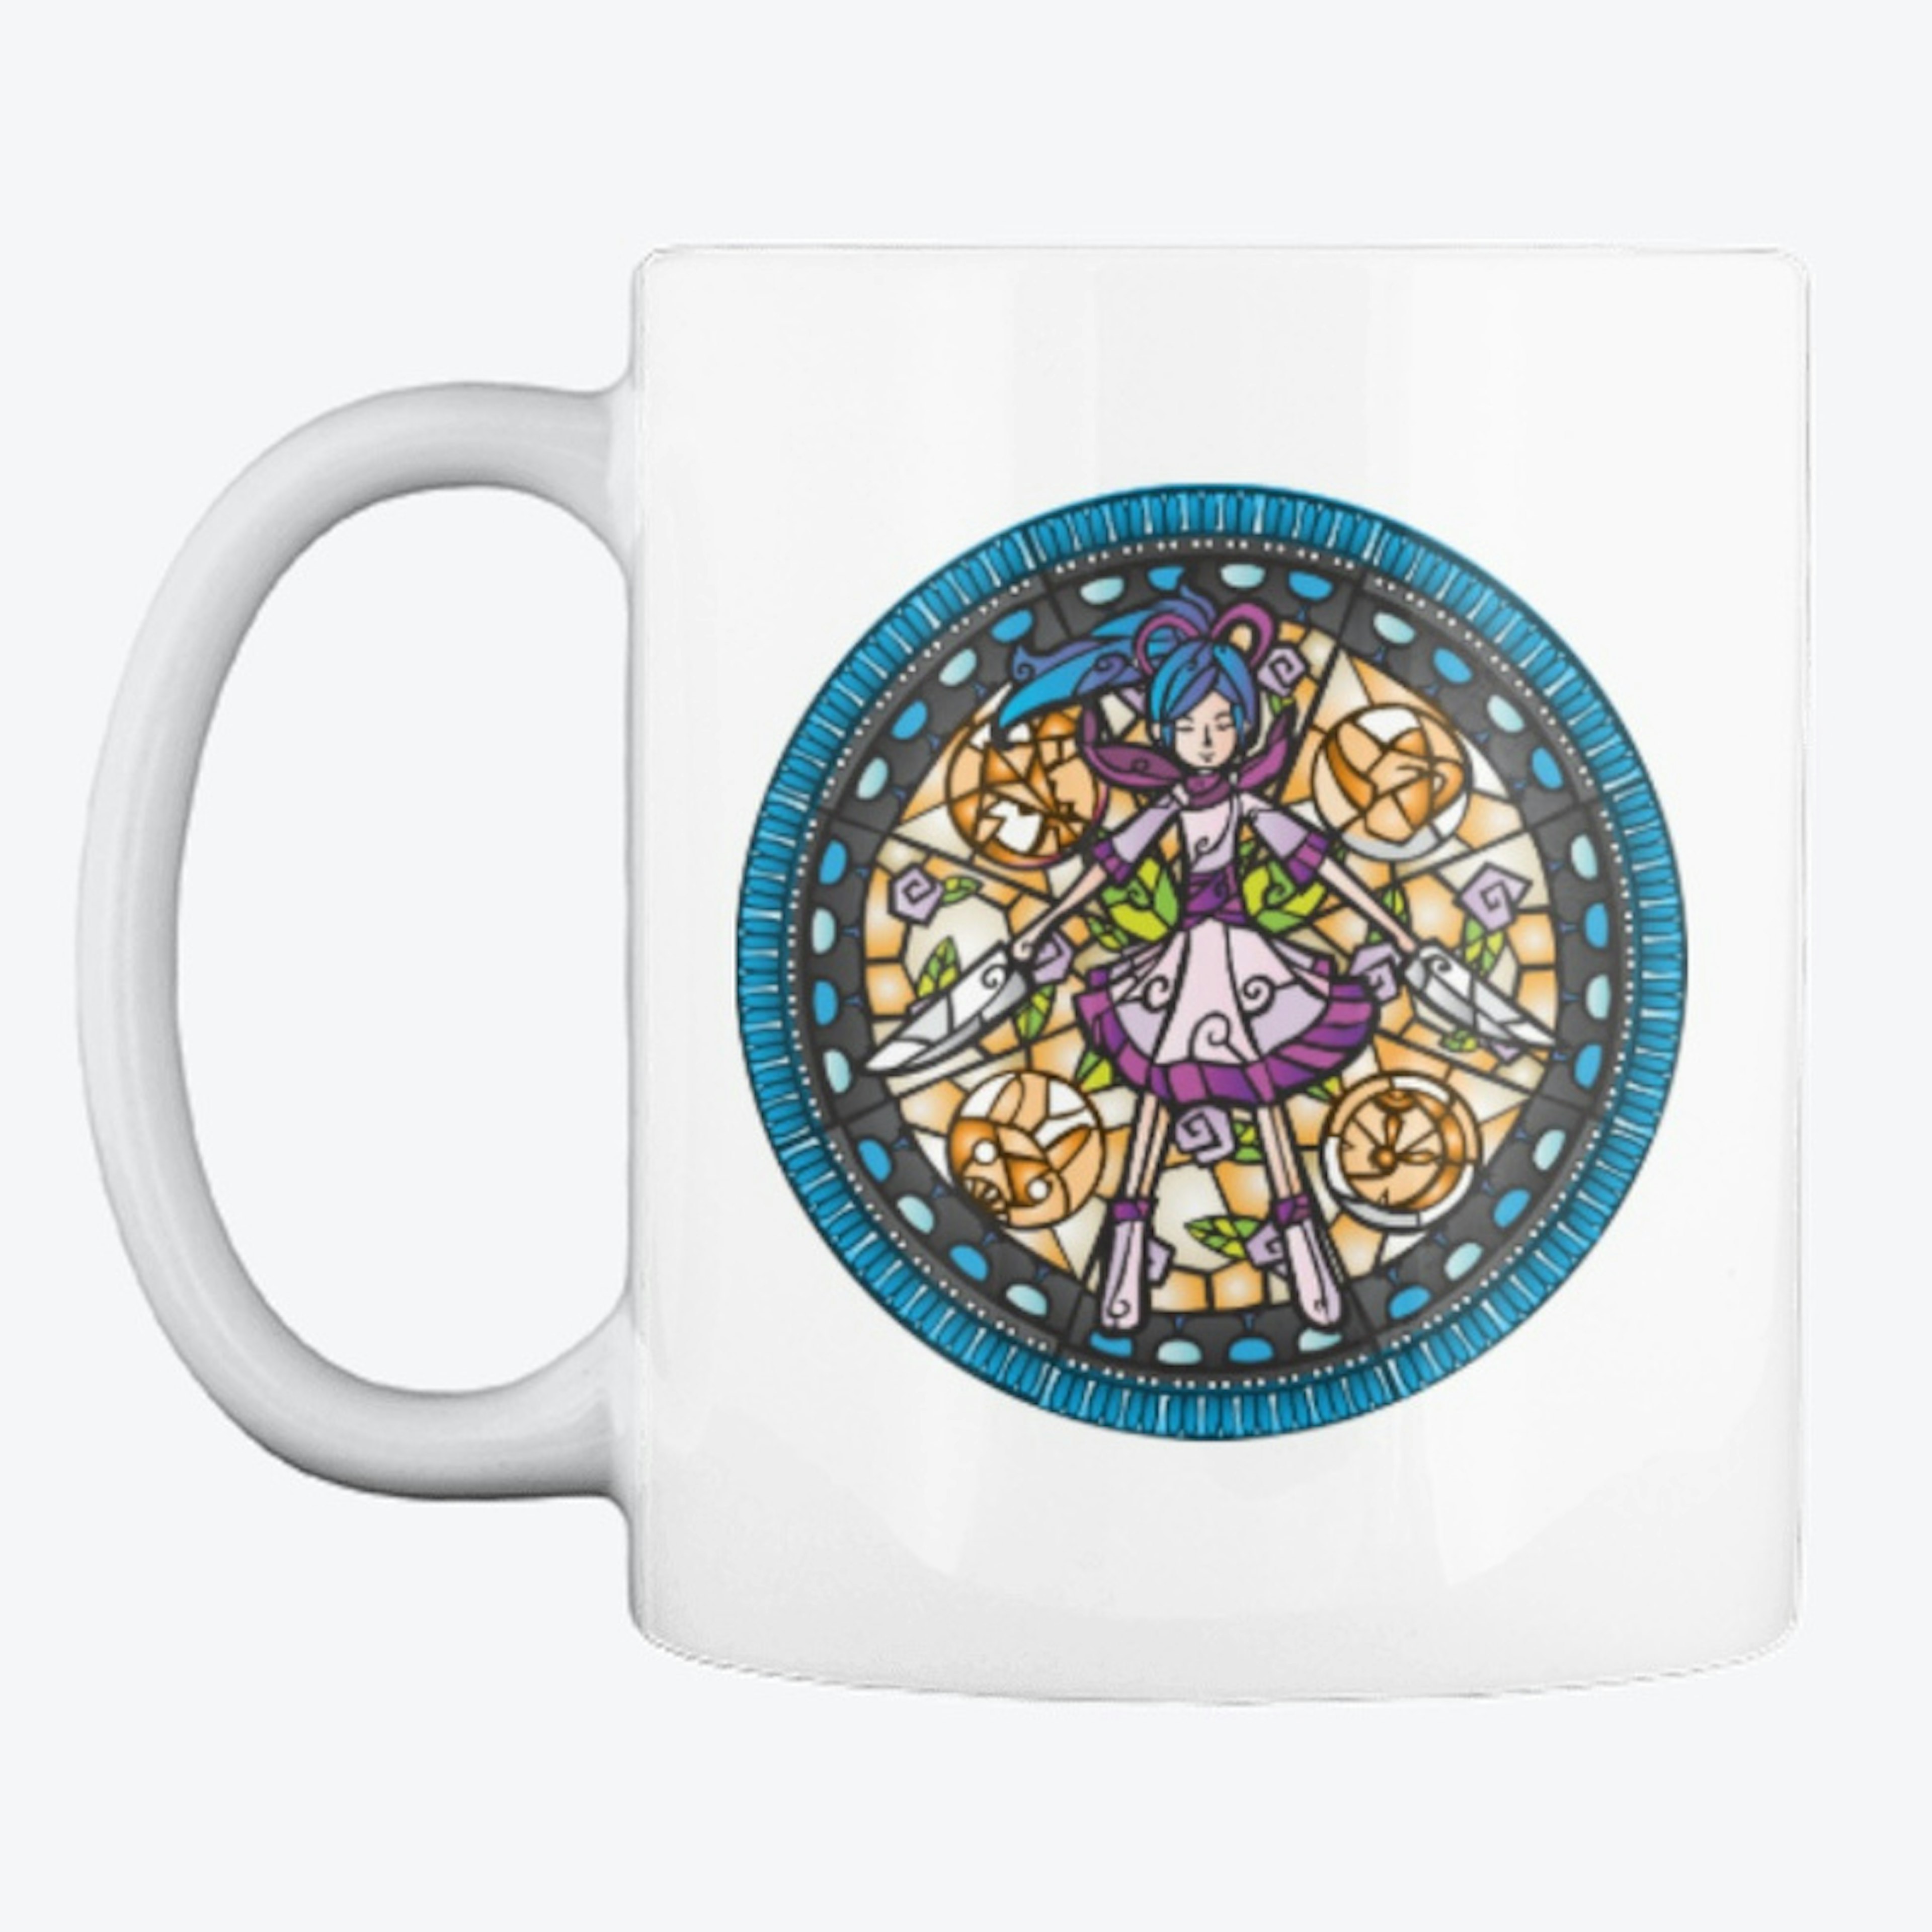 Neraine in the Glass - Mug